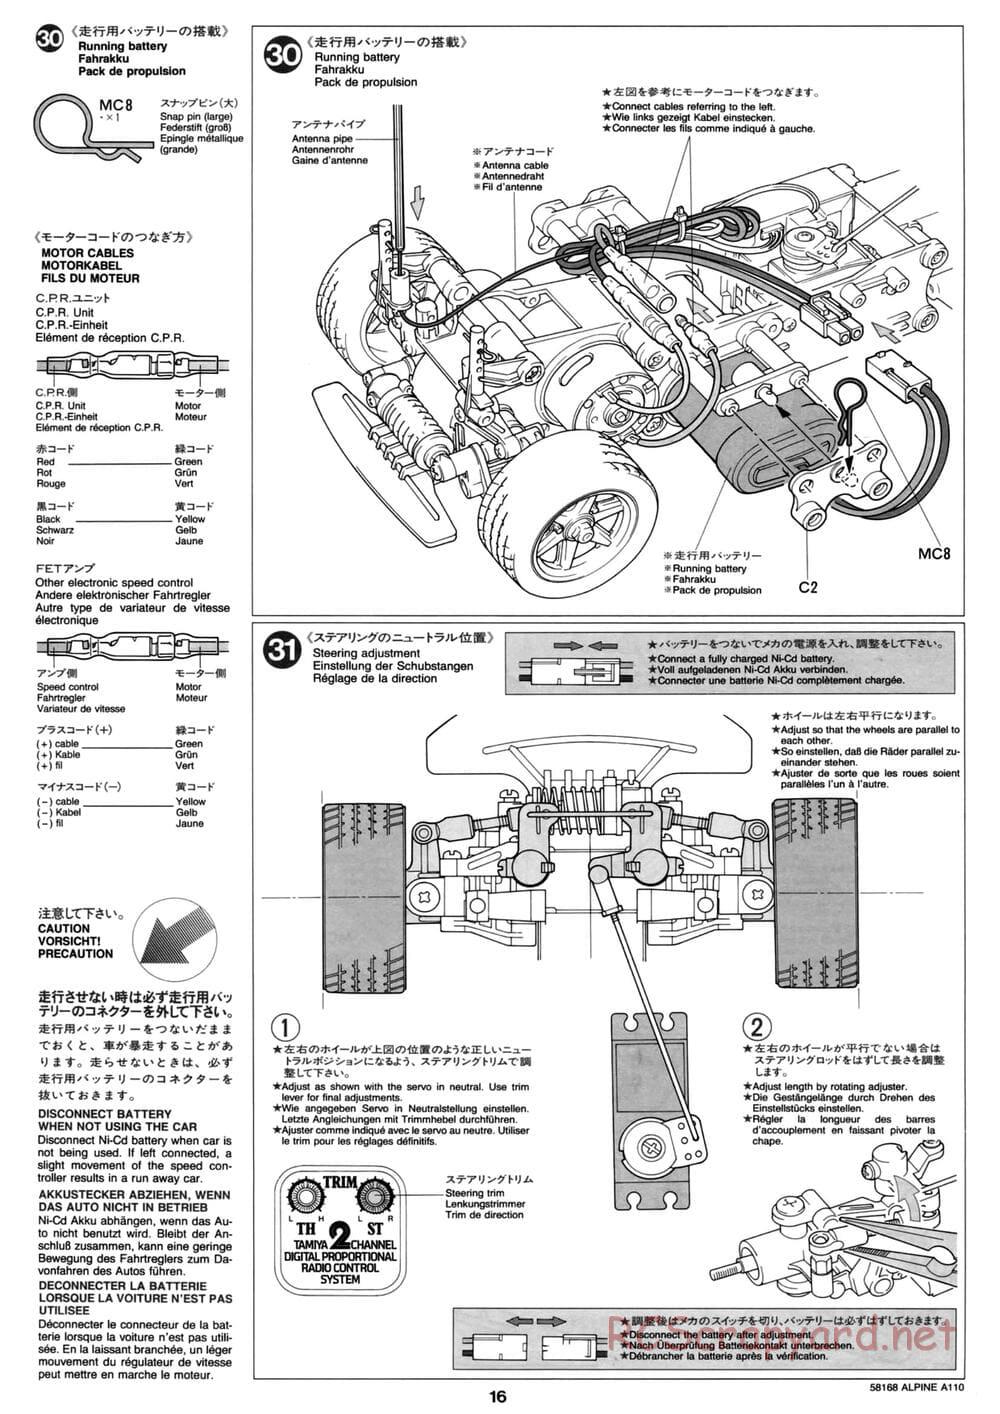 Tamiya - Alpine A110 - M02 Chassis - Manual - Page 16